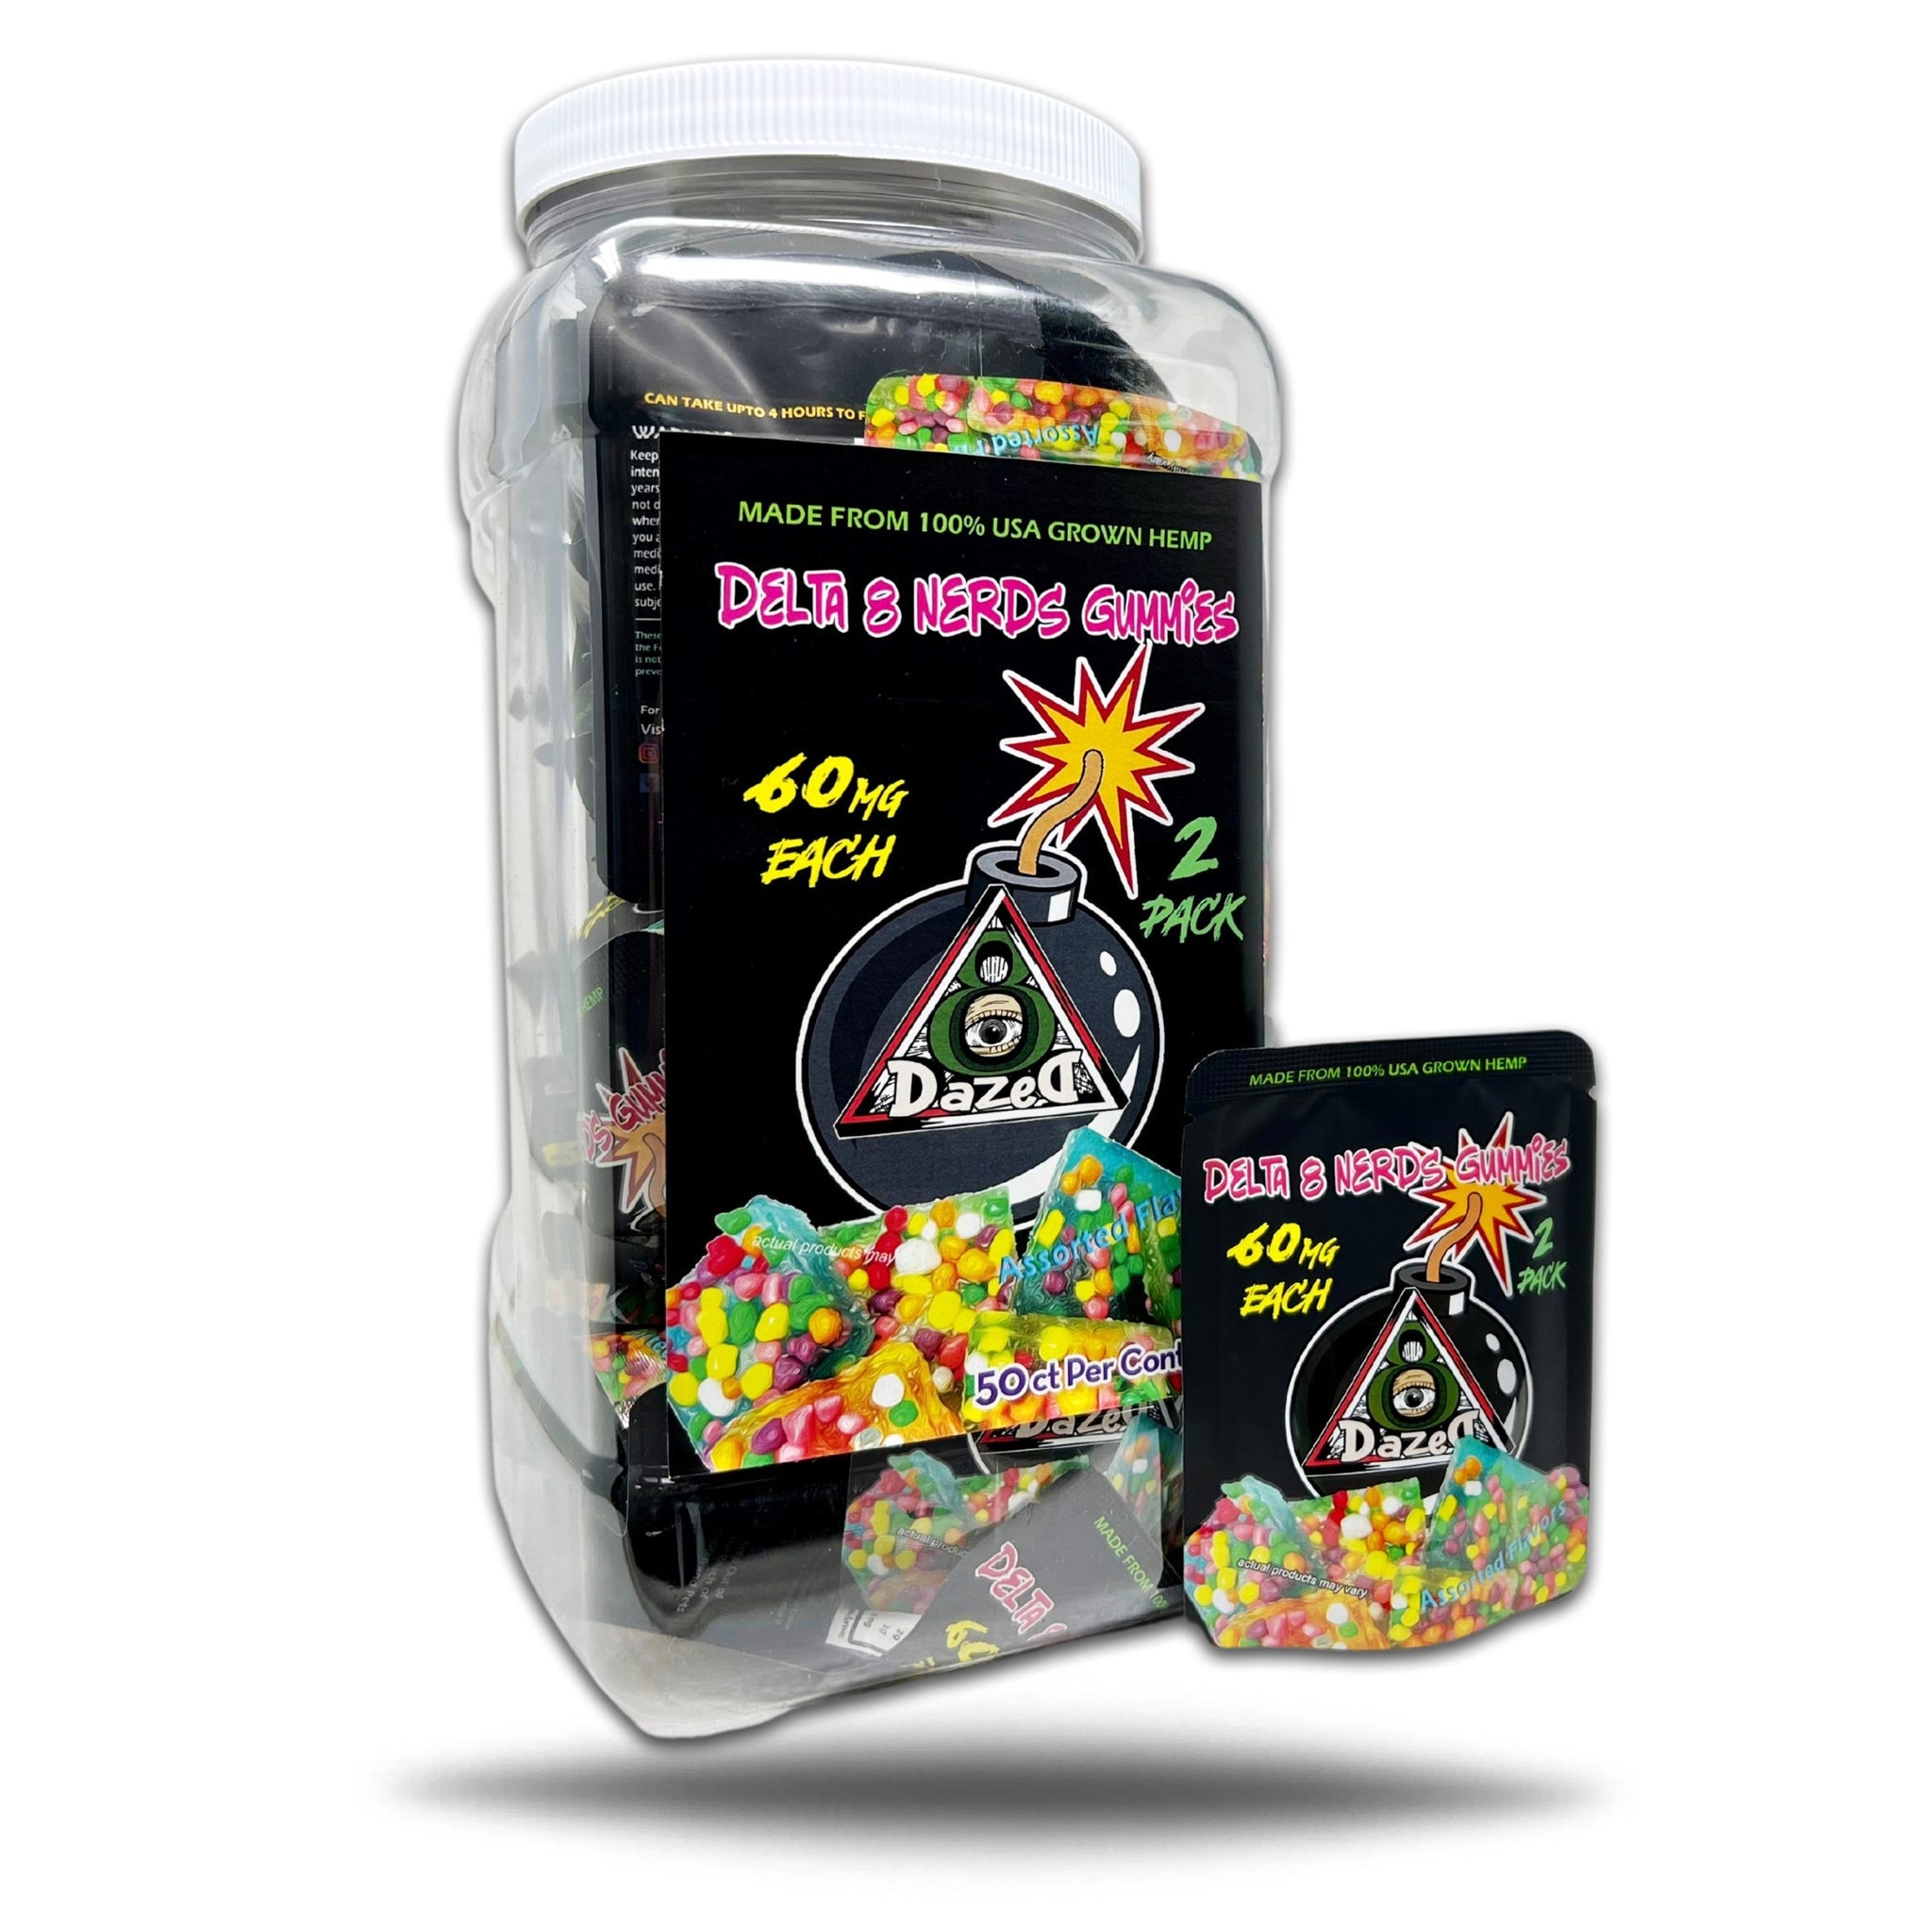 Wholesale Dazed8 Delta 8 Nerds Gummies Assorted Flavor 2ct Pack 50ct Jar